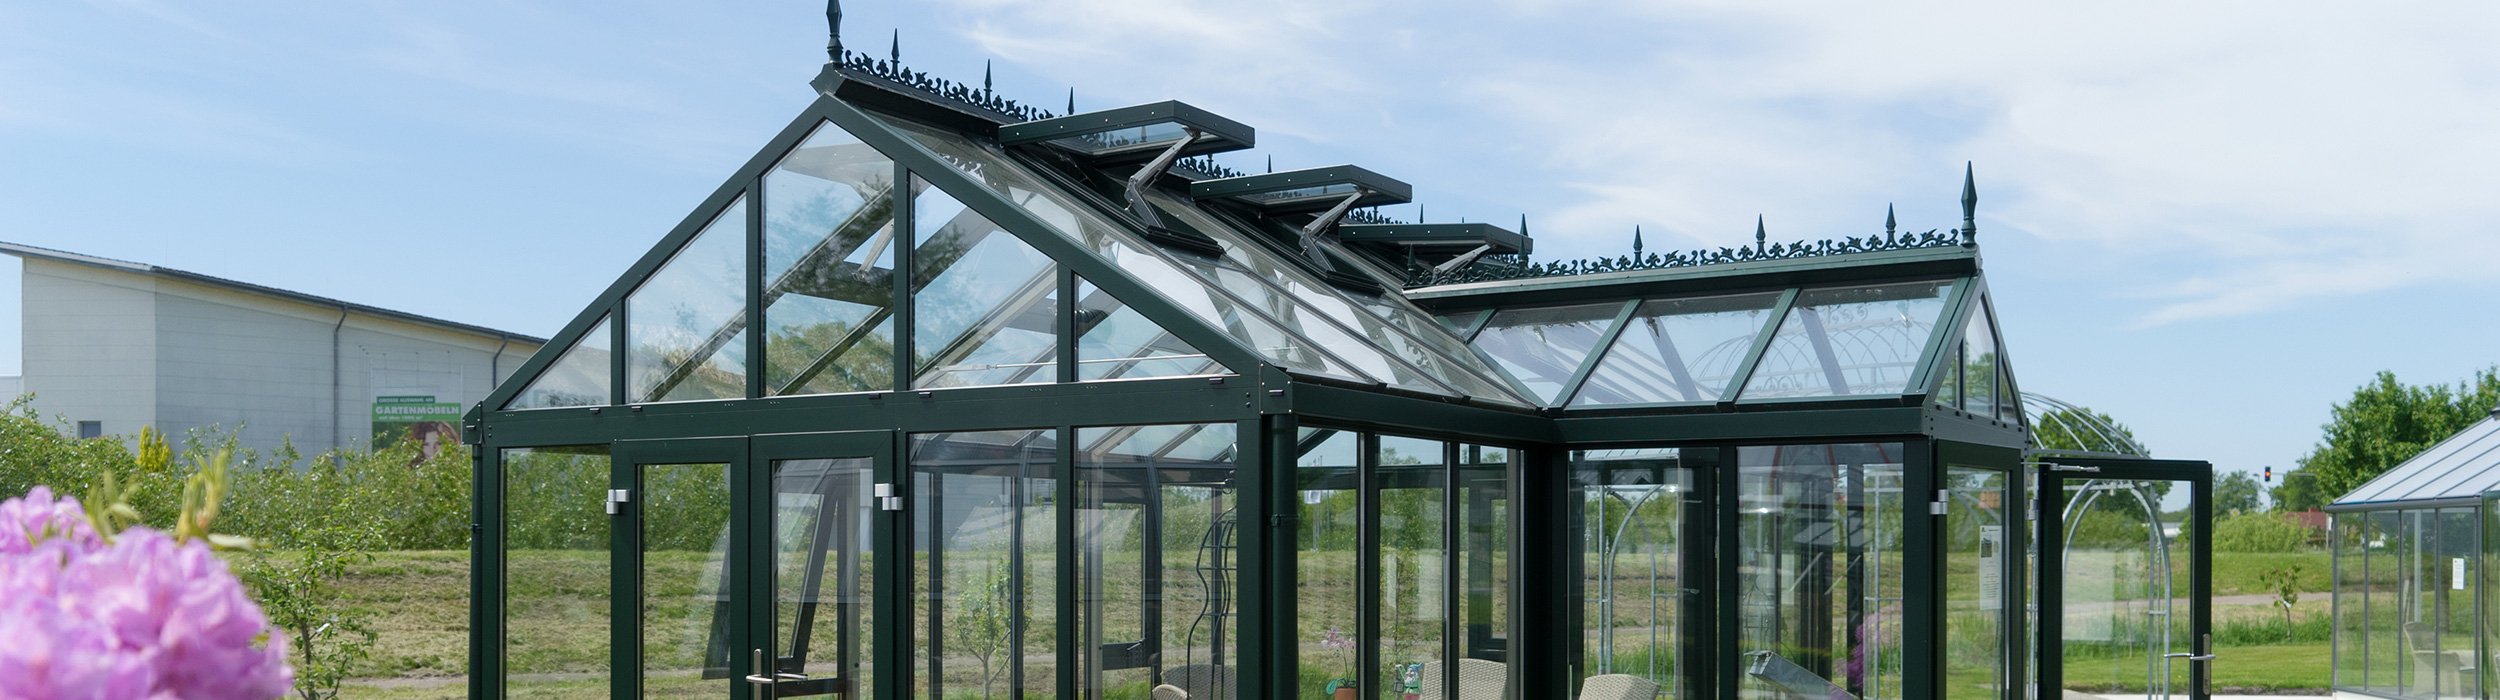 York greenhouse in the exhibition garden in Apen